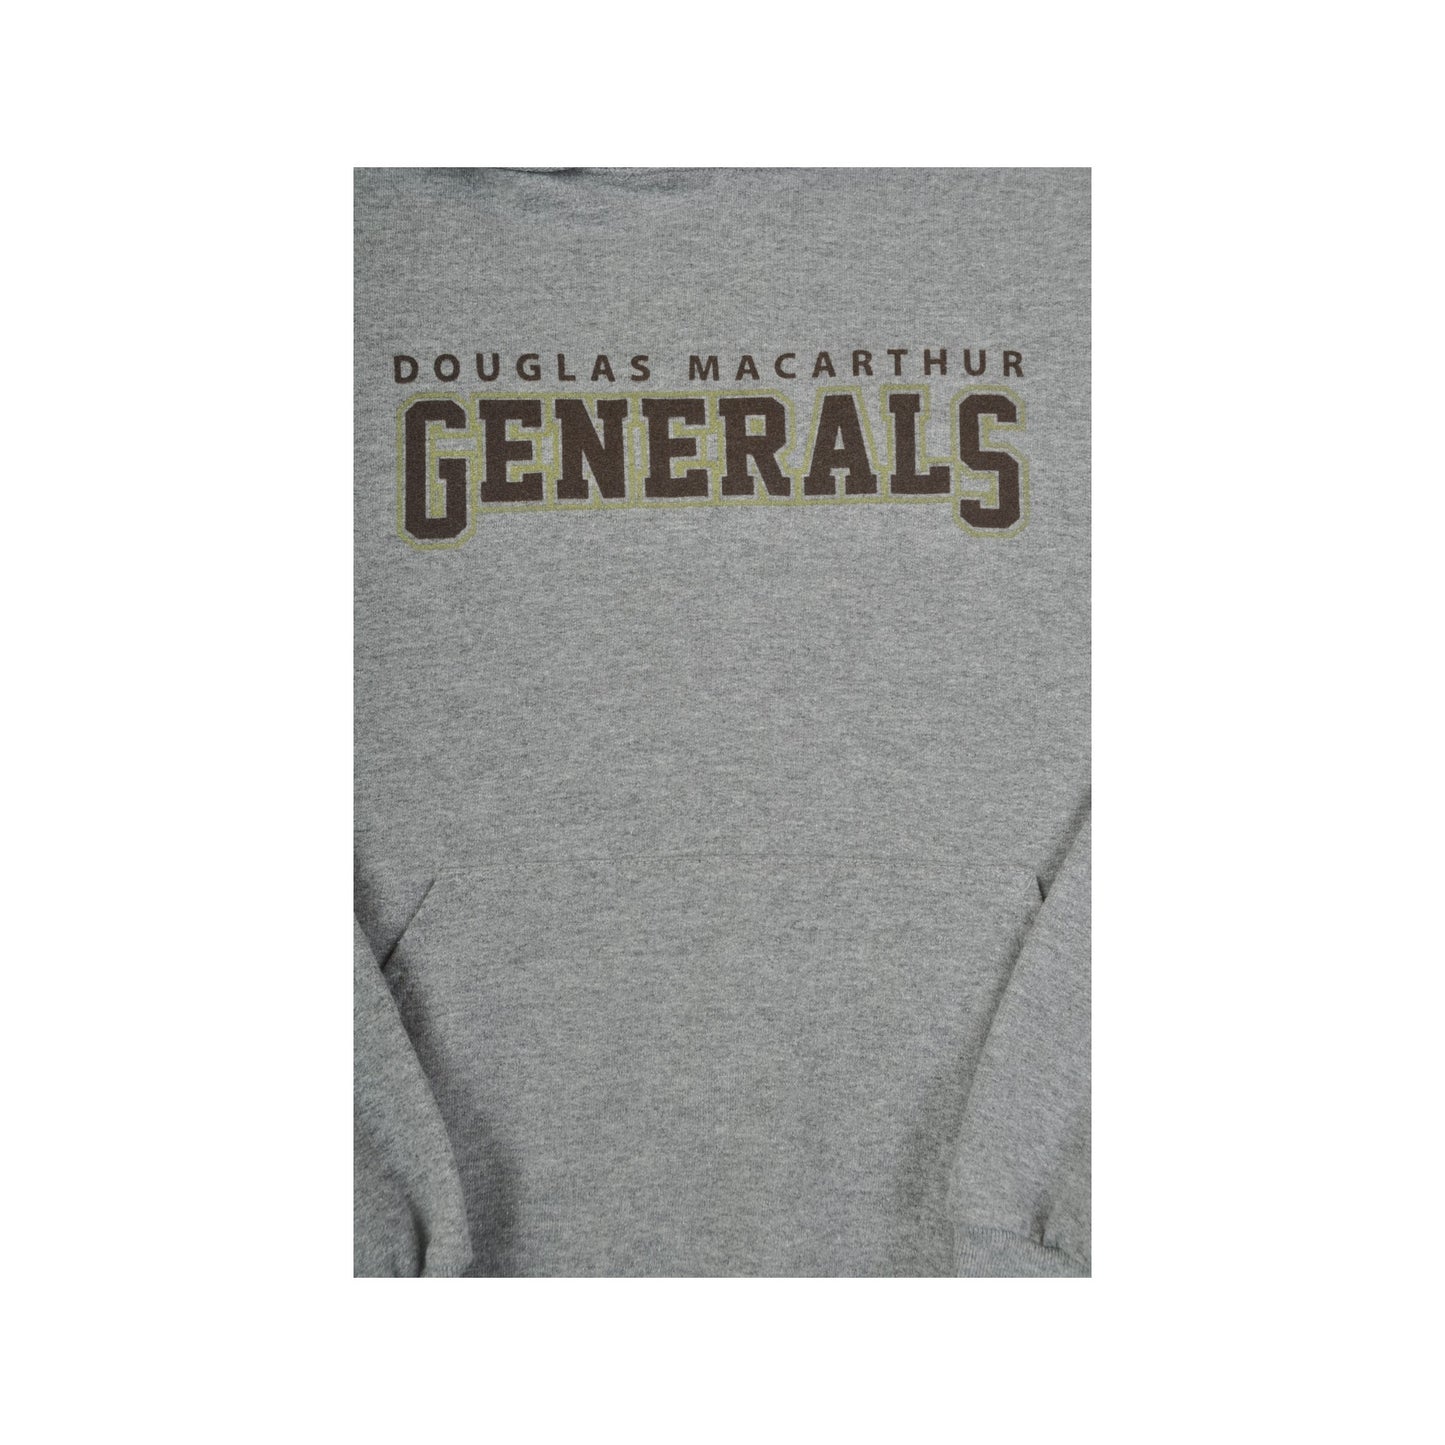 Vintage Douglas Macarthur Generals Hoodie Sweatshirt Grey Small